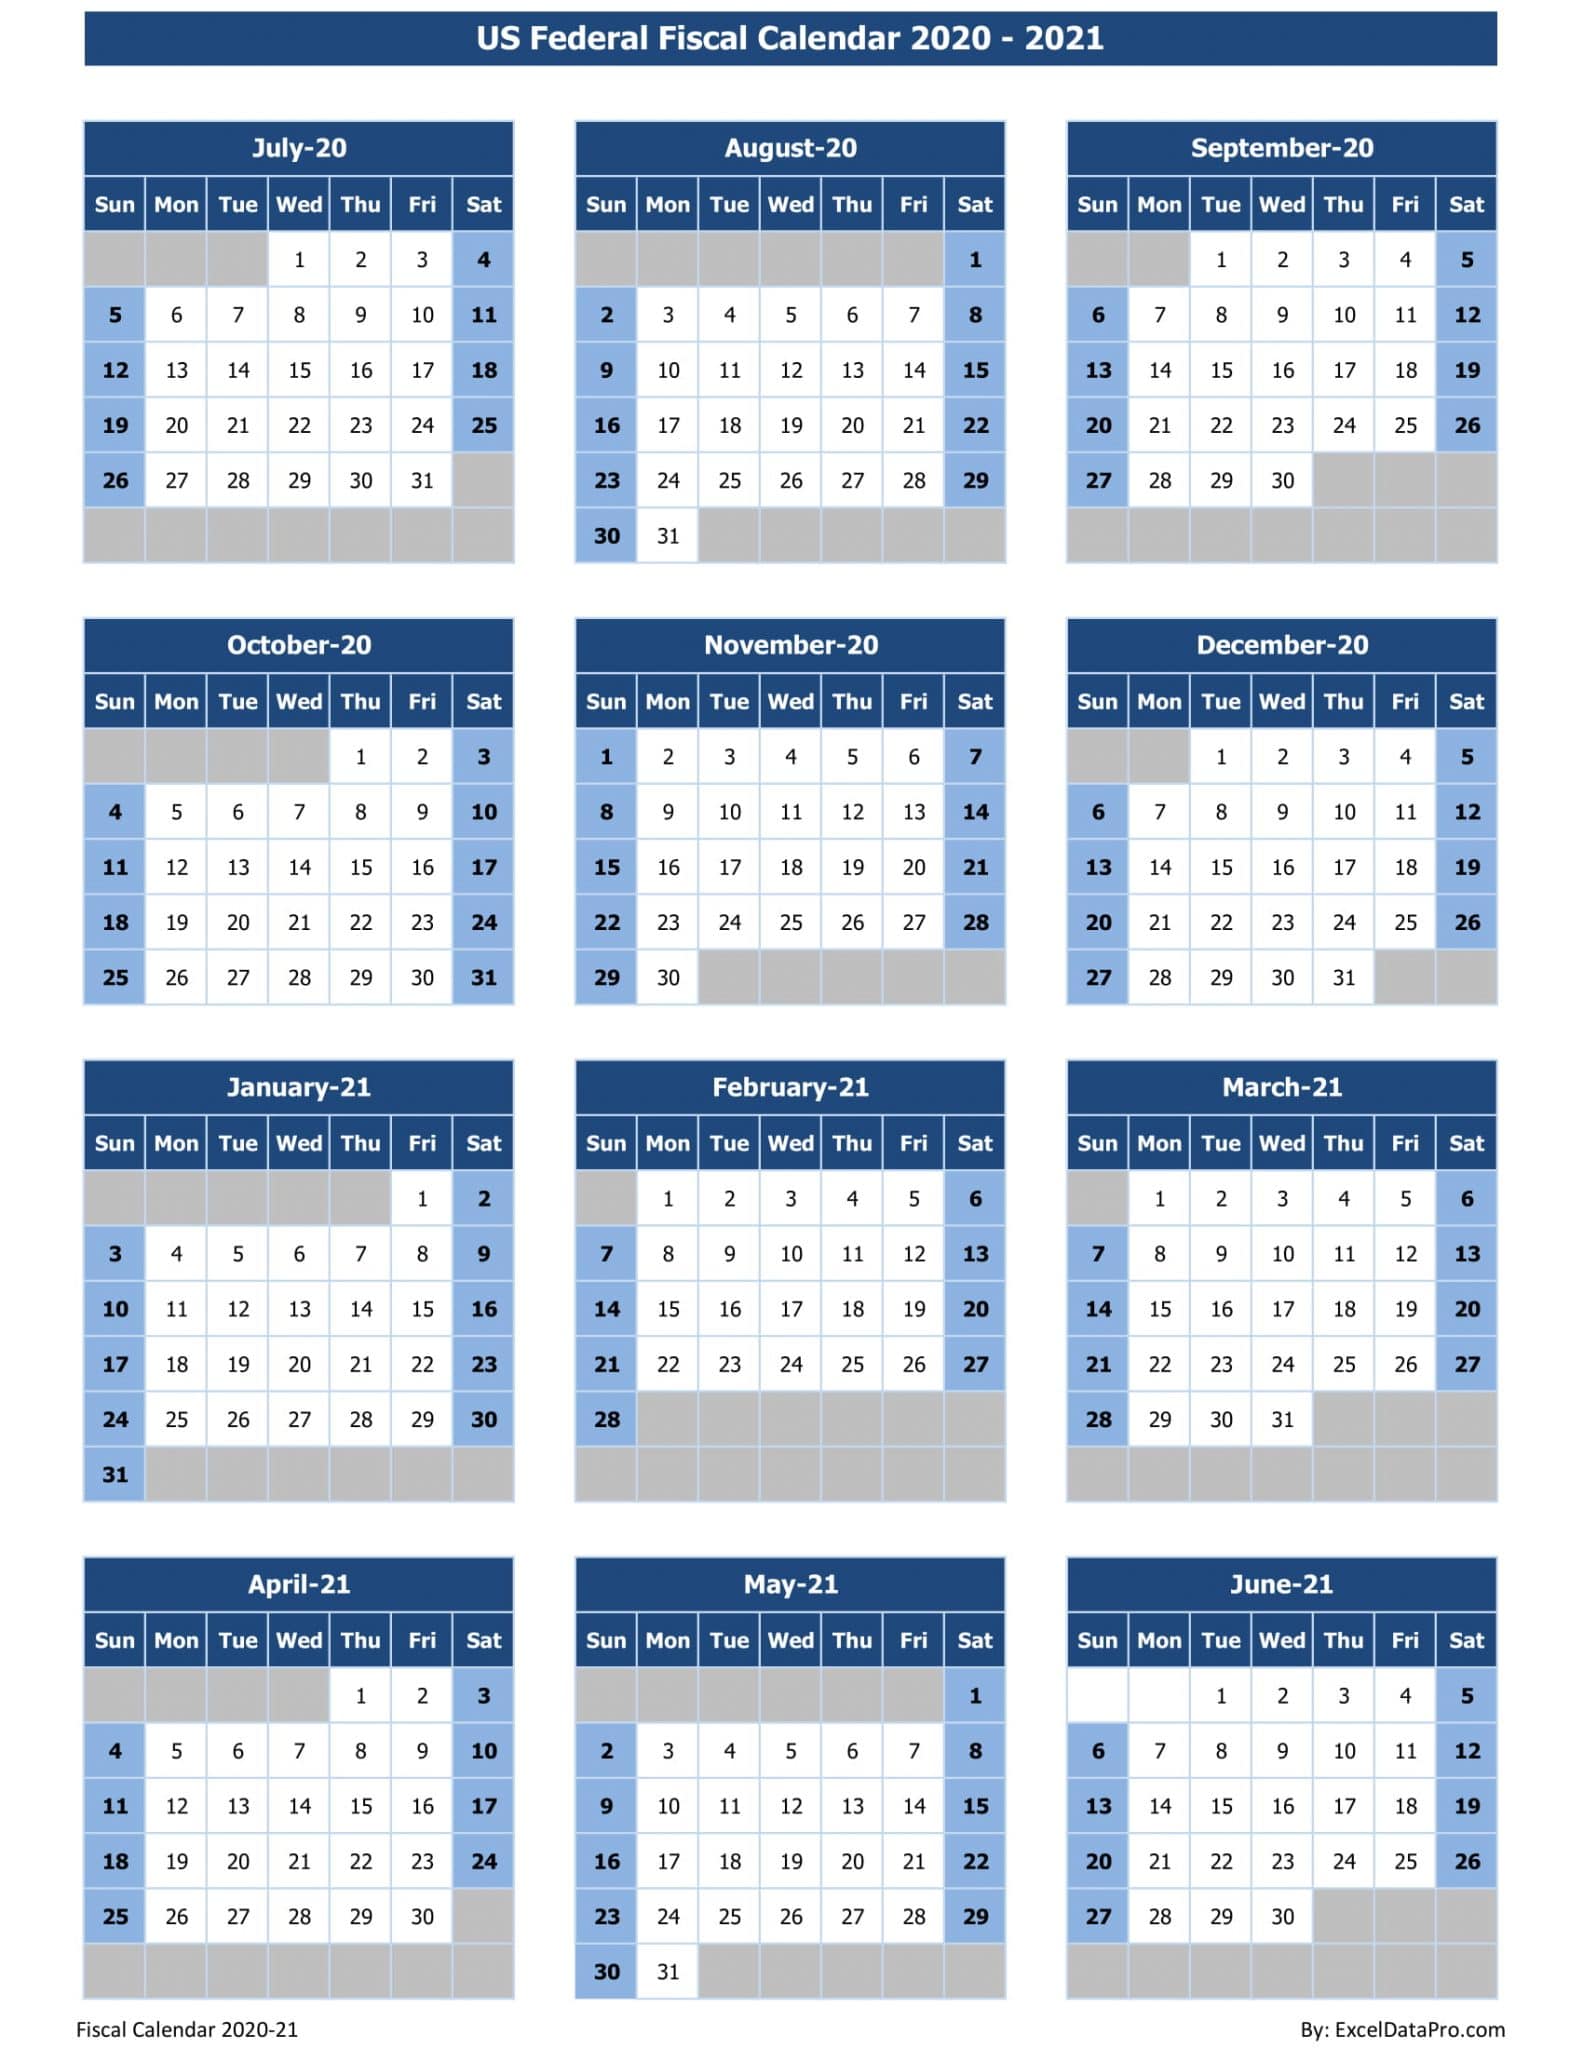 Calendar June 2021 2021 fiscal calendar with holidays